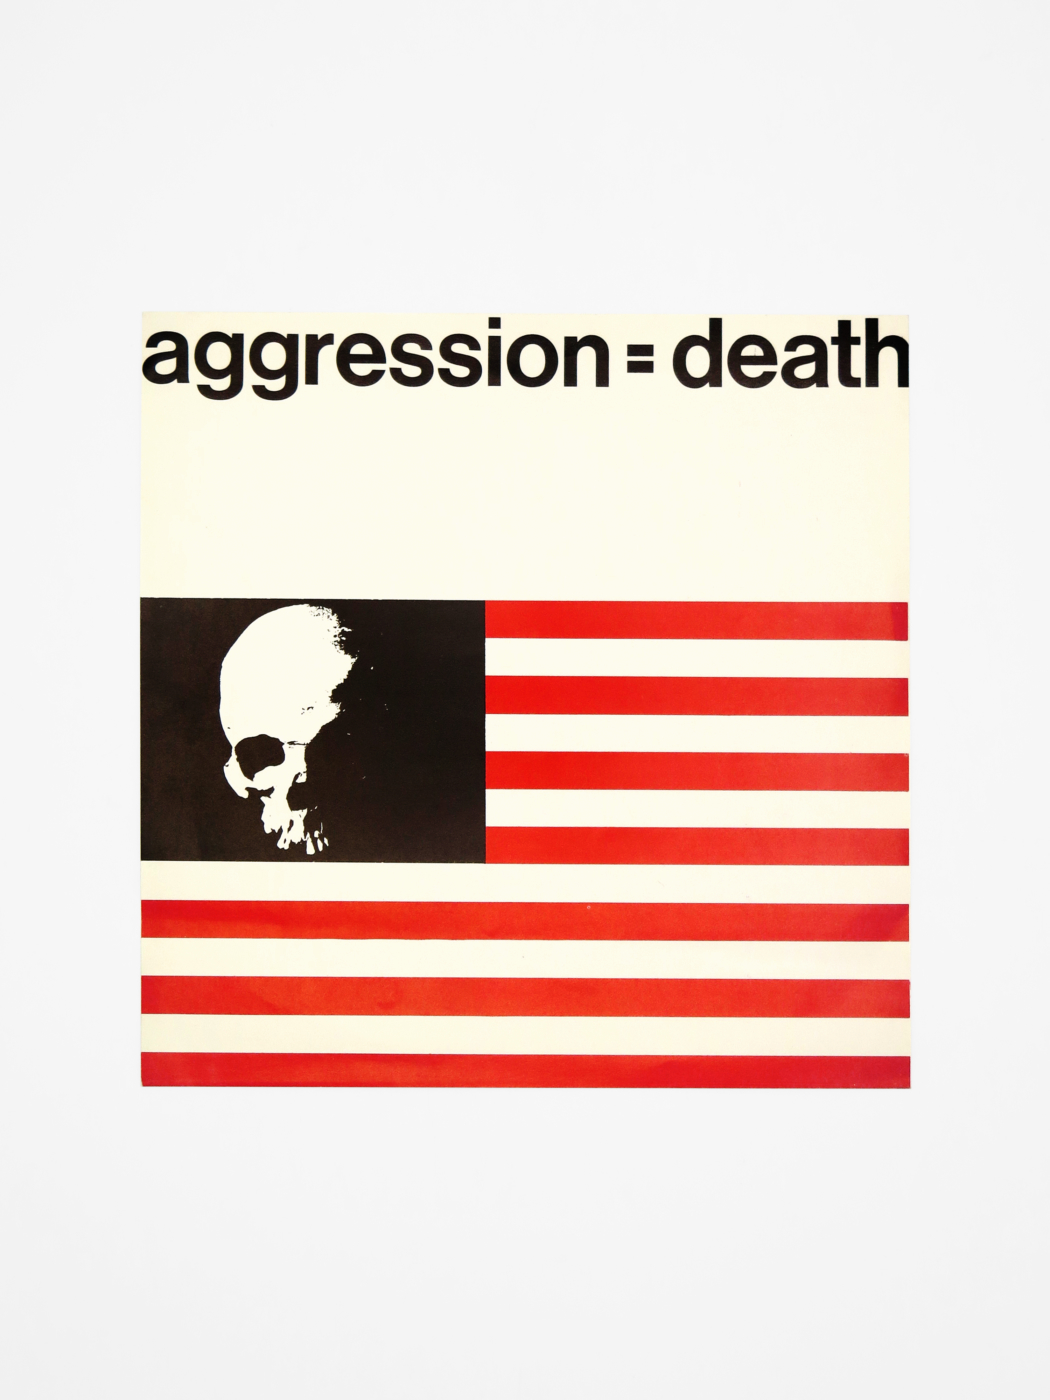 Richard Alcroft, aggression = death